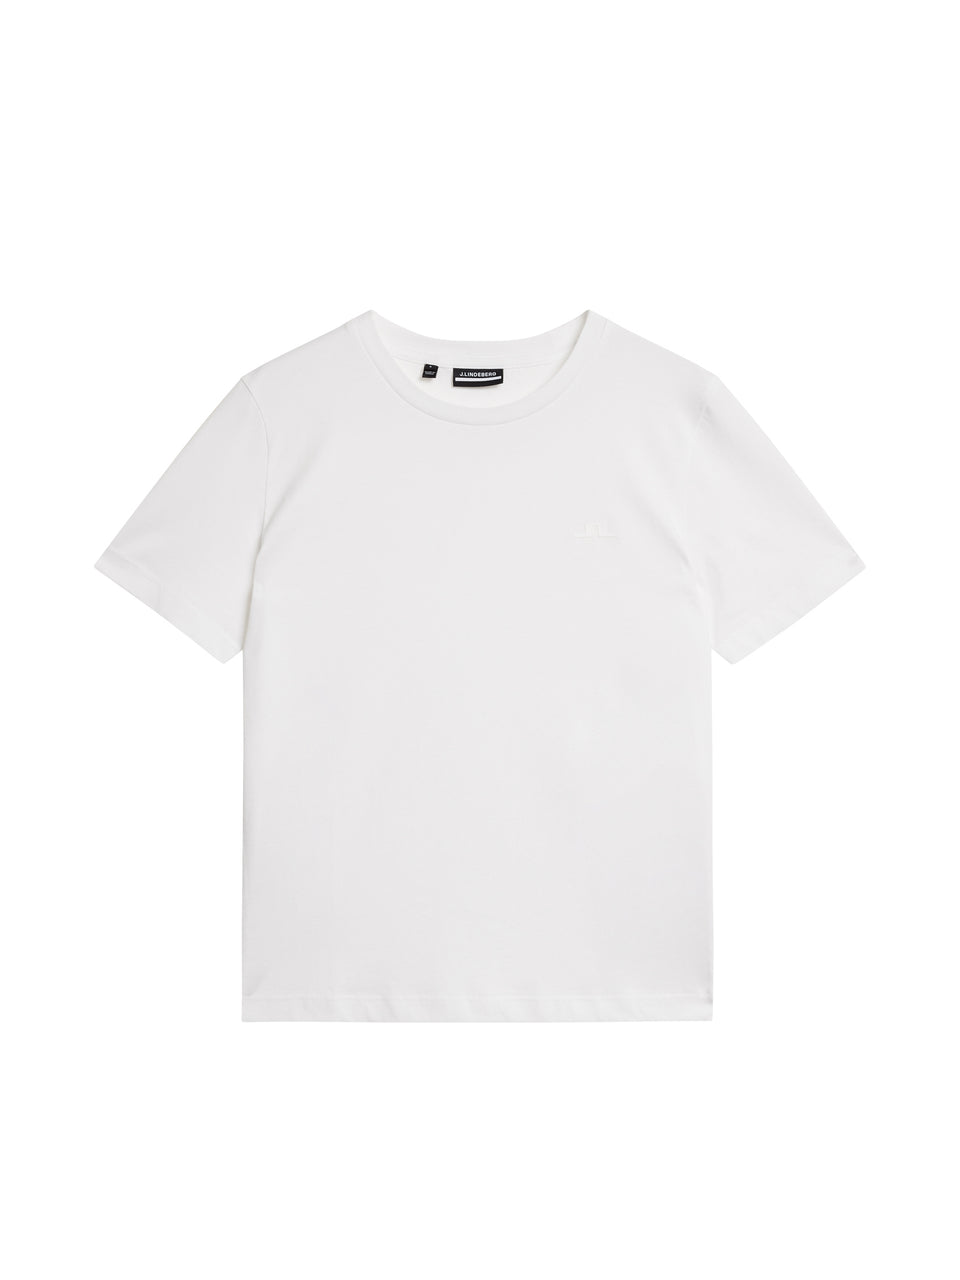 W Alpha T-shirt / White